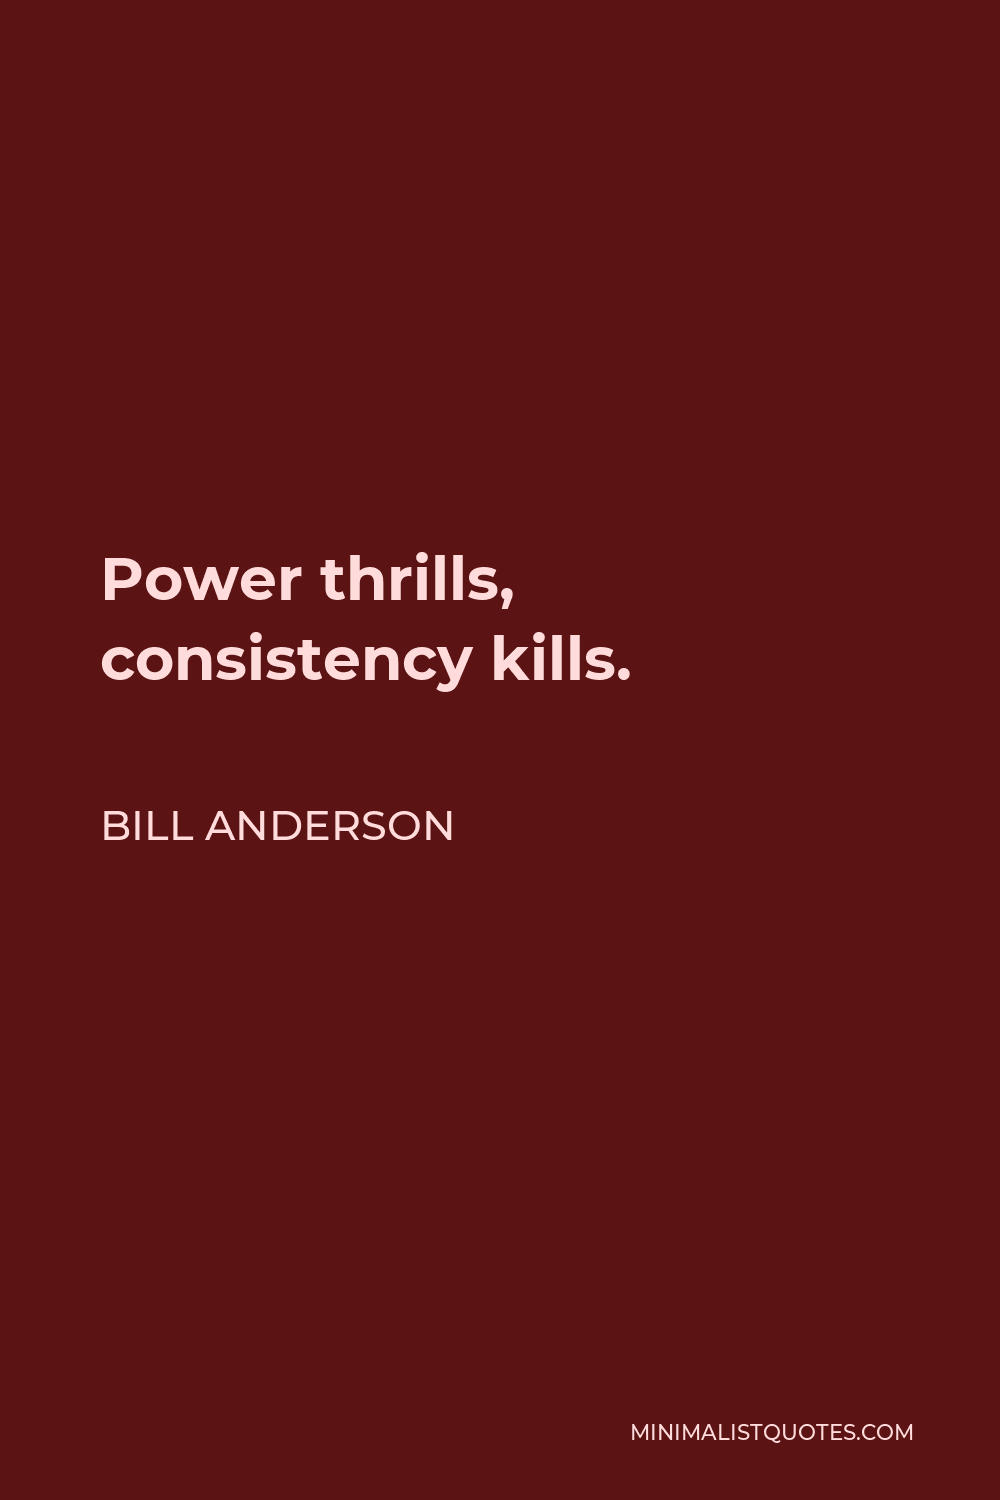 Bill Anderson Quote - Power thrills, consistency kills.